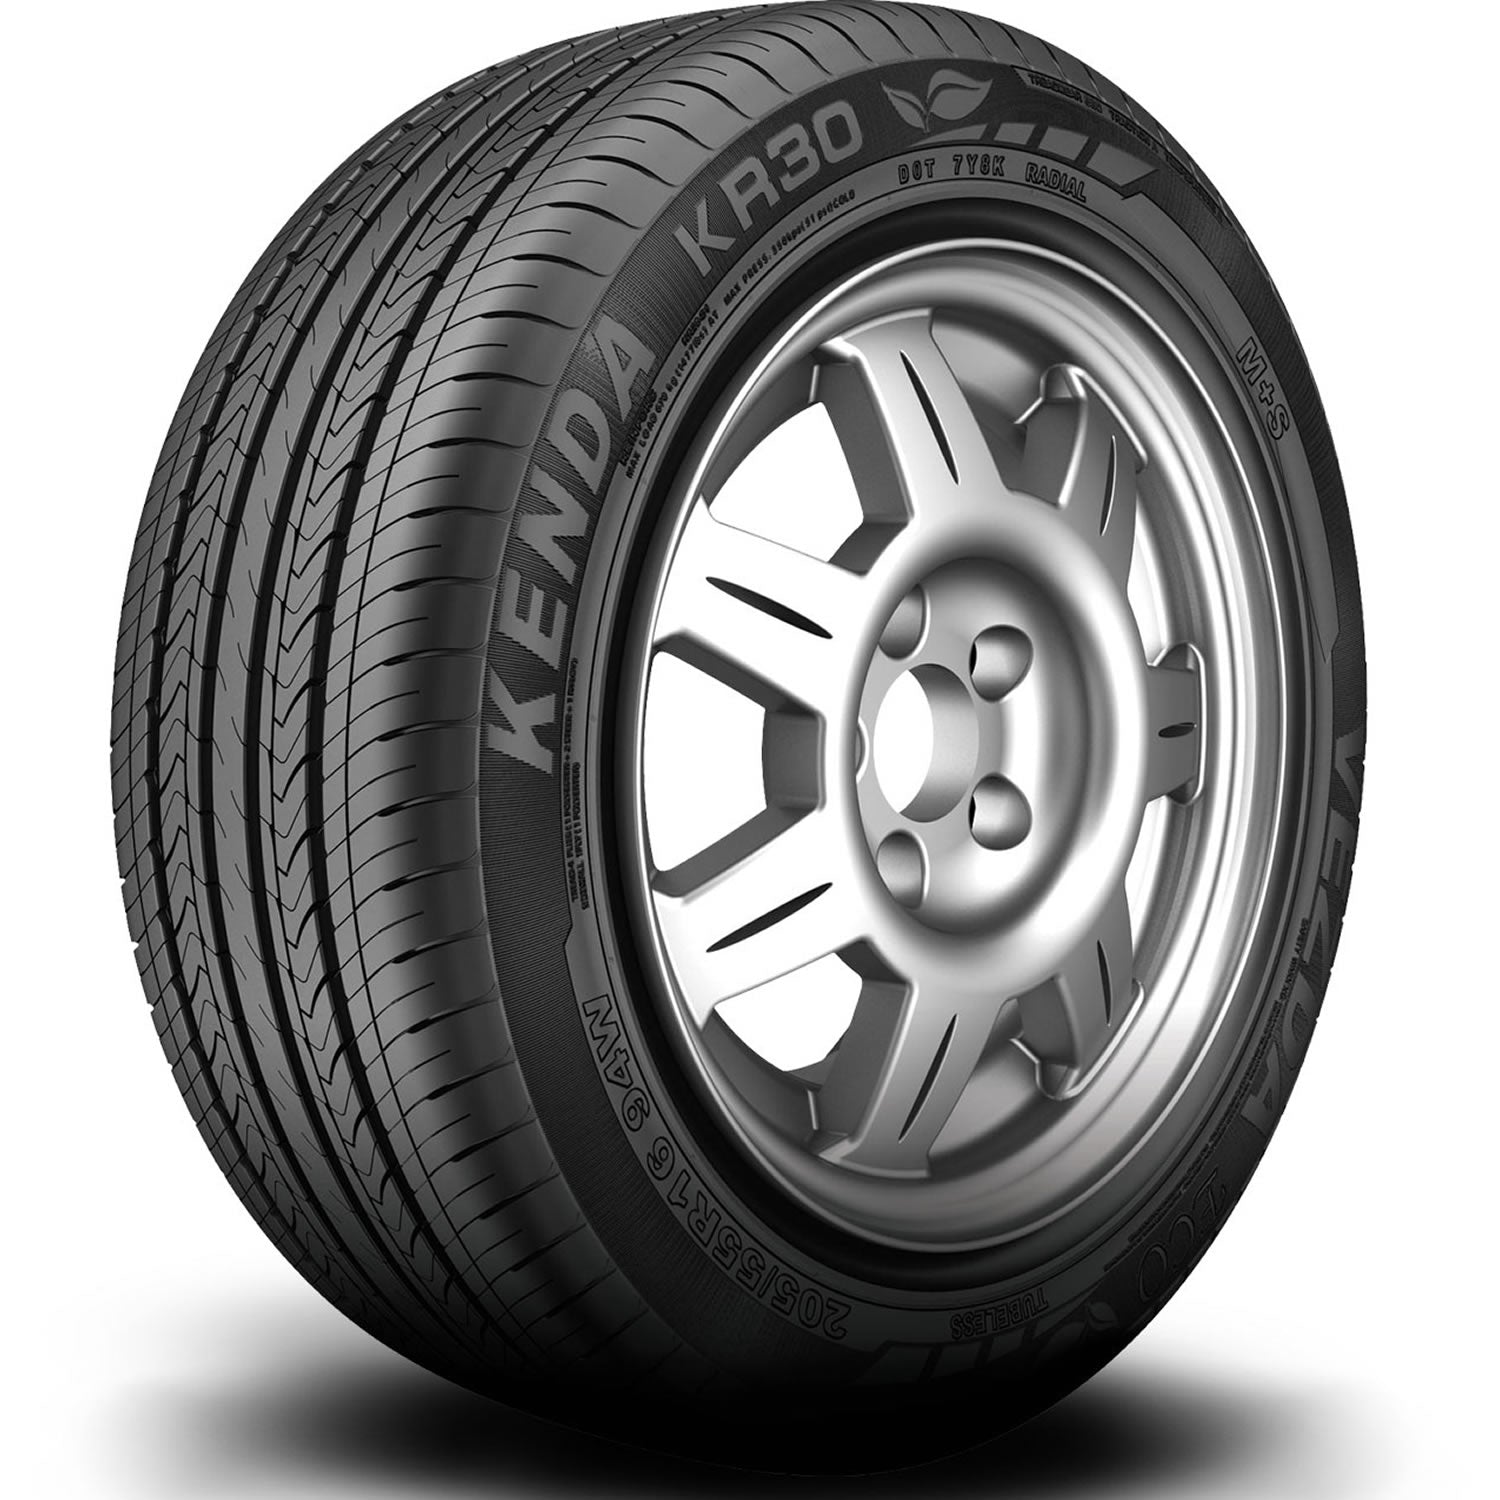 KENDA VEZDA ECO 225/50R17 (25.9X9R 17) Tires